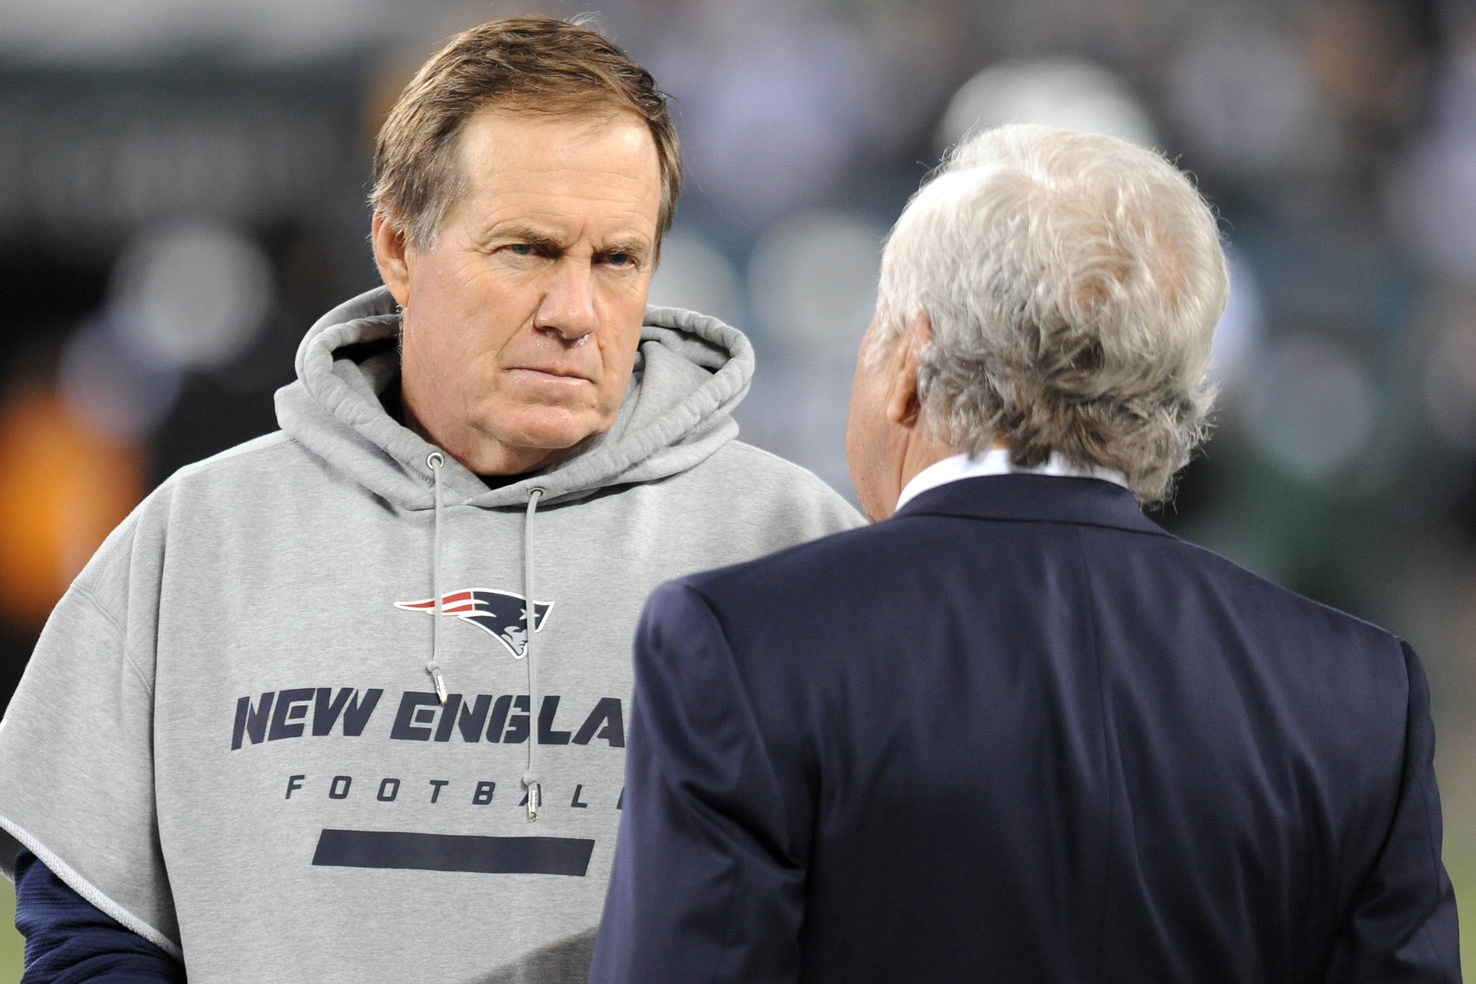 Patriots coach Bill Belichick has won six Super Bowl working for New England owner Robert Kraft.